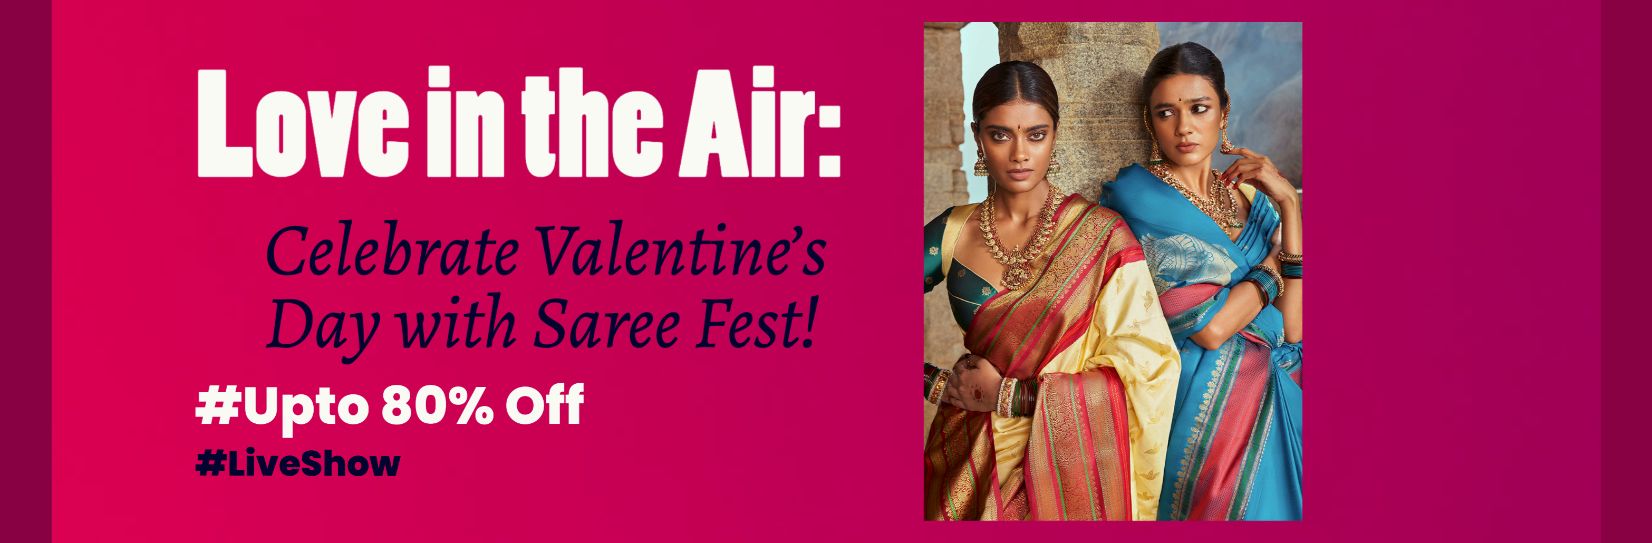 Livebox India Saree Valentine's Day sale